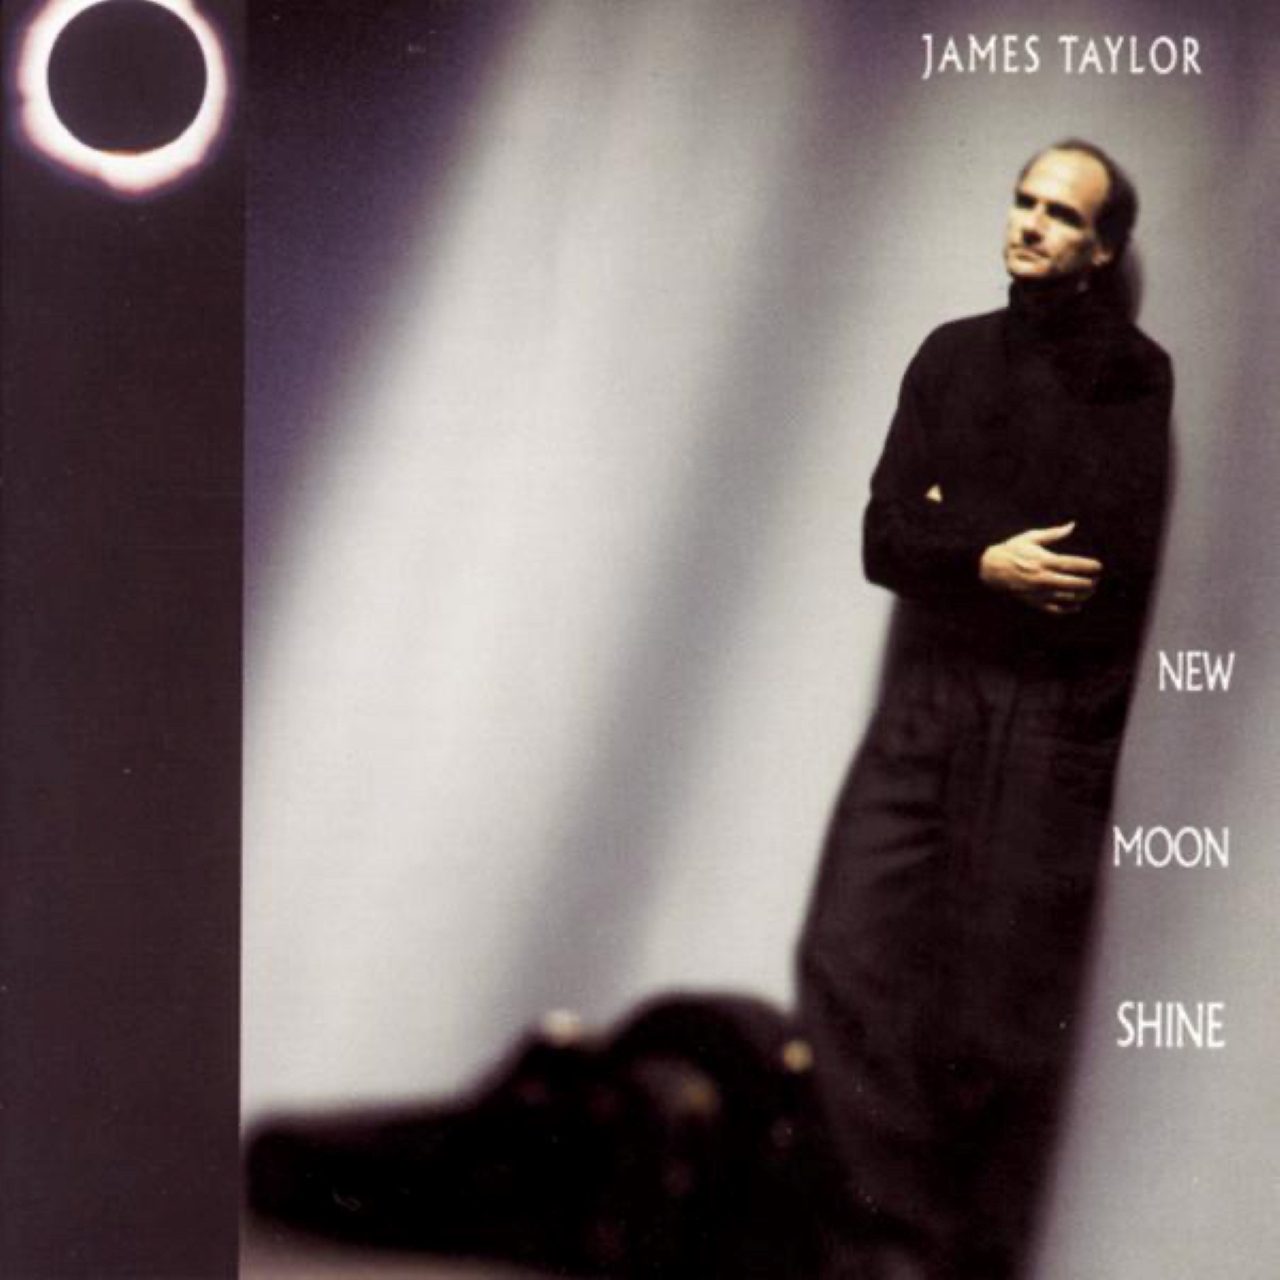 James Taylor – New Moon Shine cover album